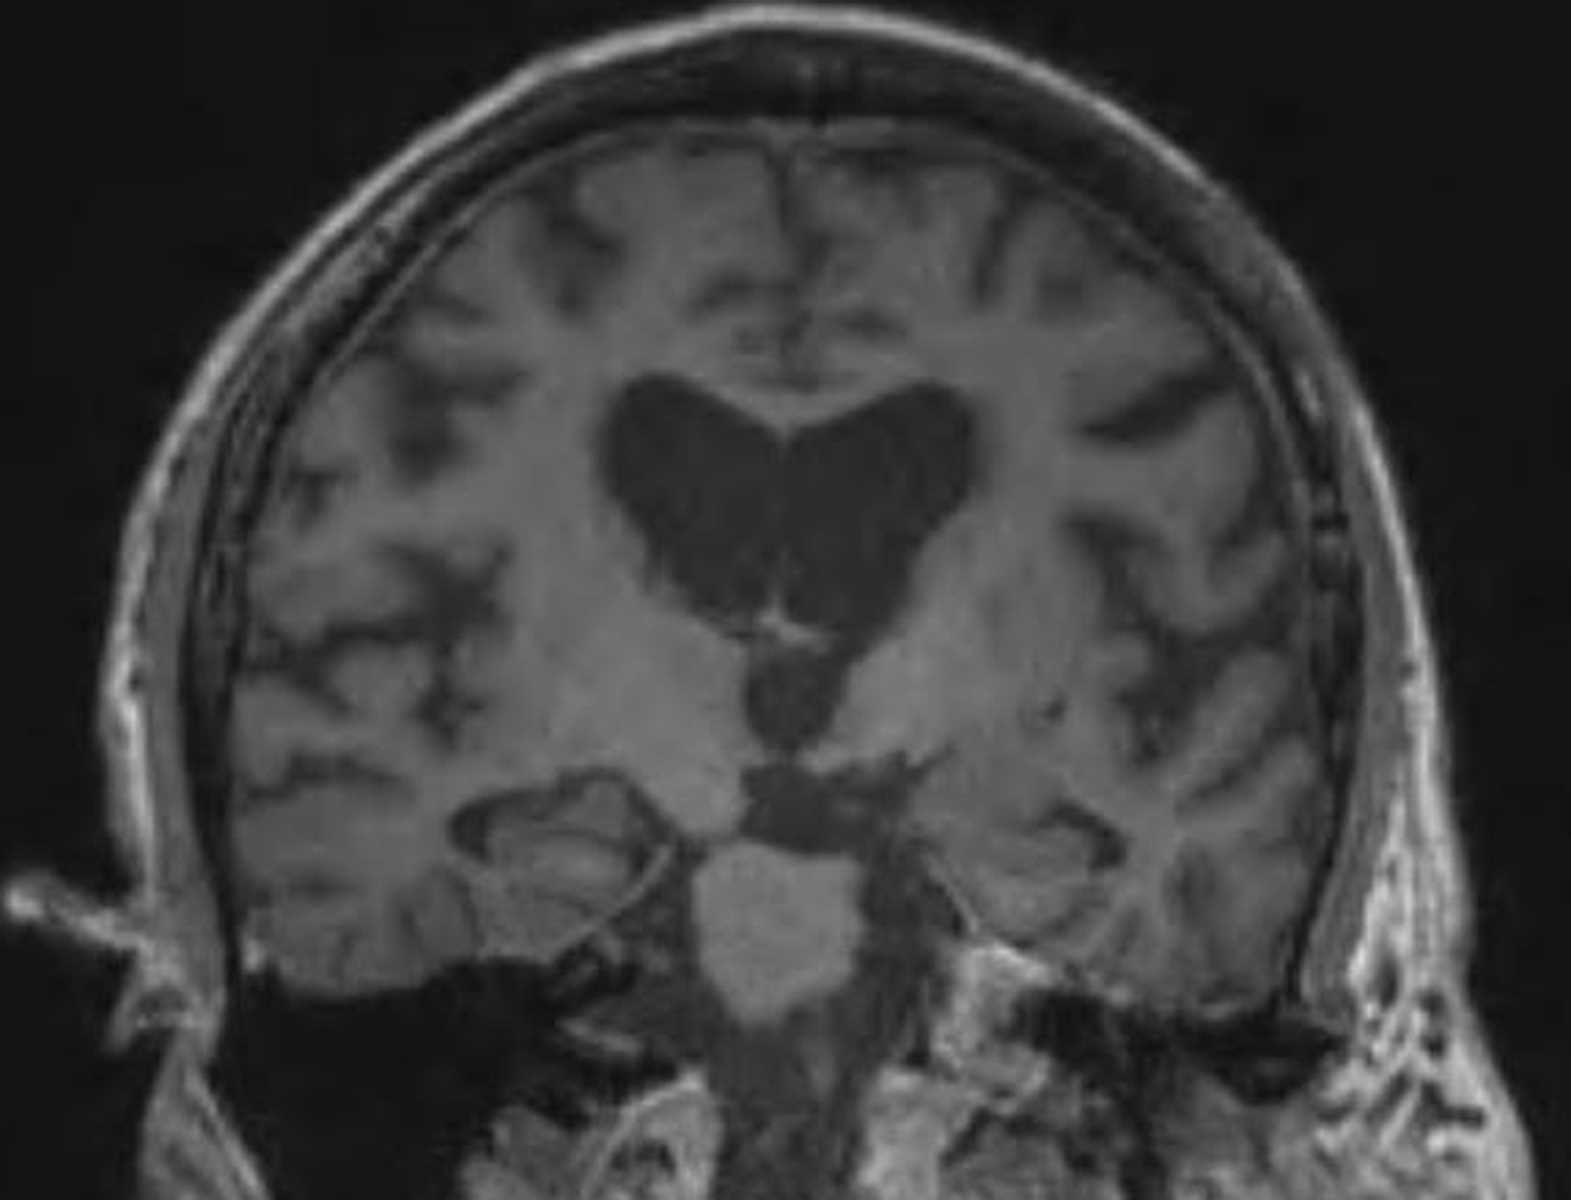 Mesial Temporal Sclerosis - CTisus CT Scan